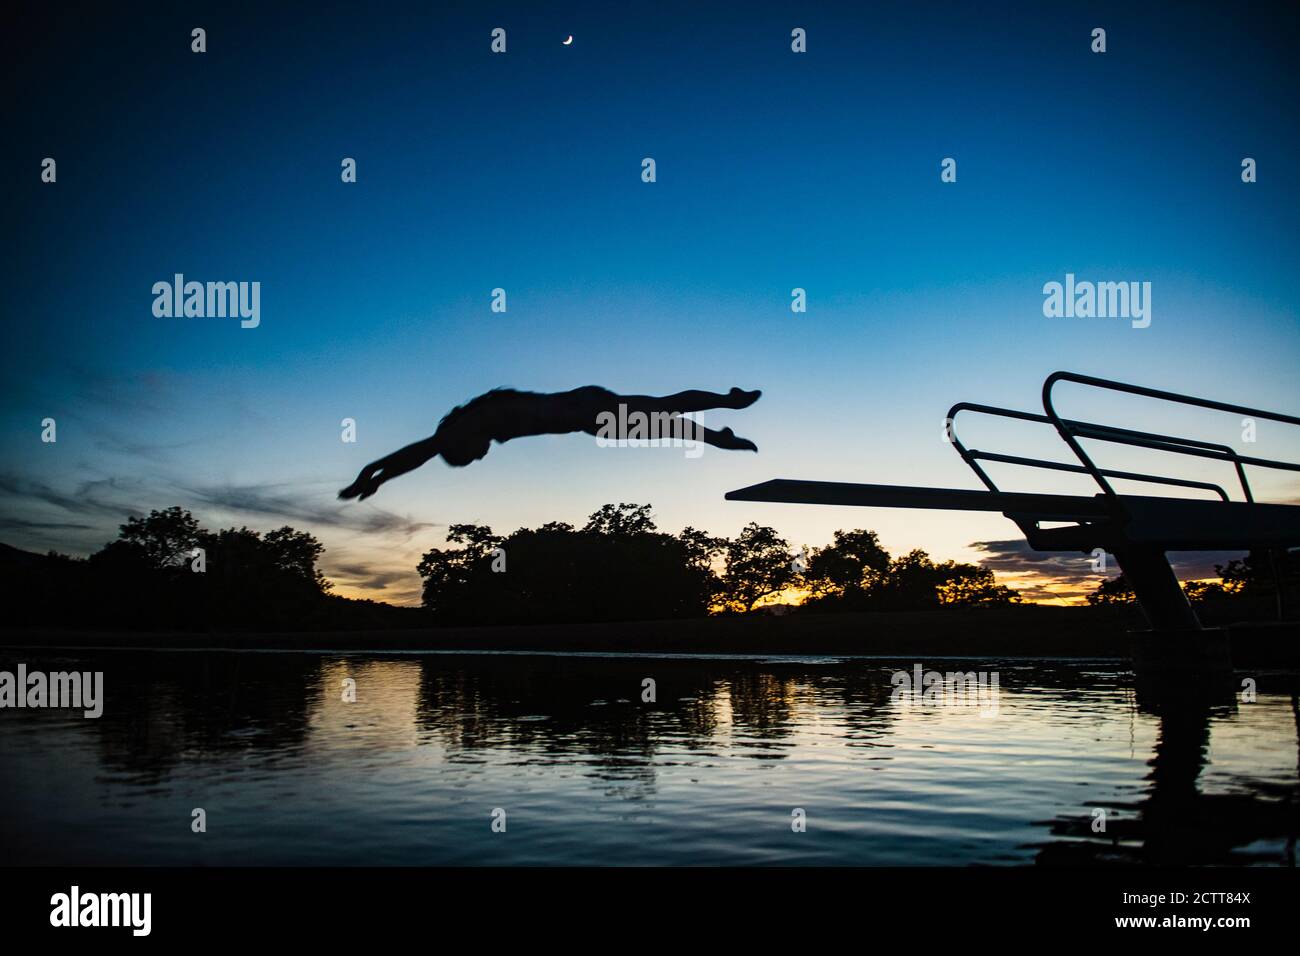 USA, Utah, Salem, Teenage girl (14-15) jumping from pier into lake at dusk Stock Photo